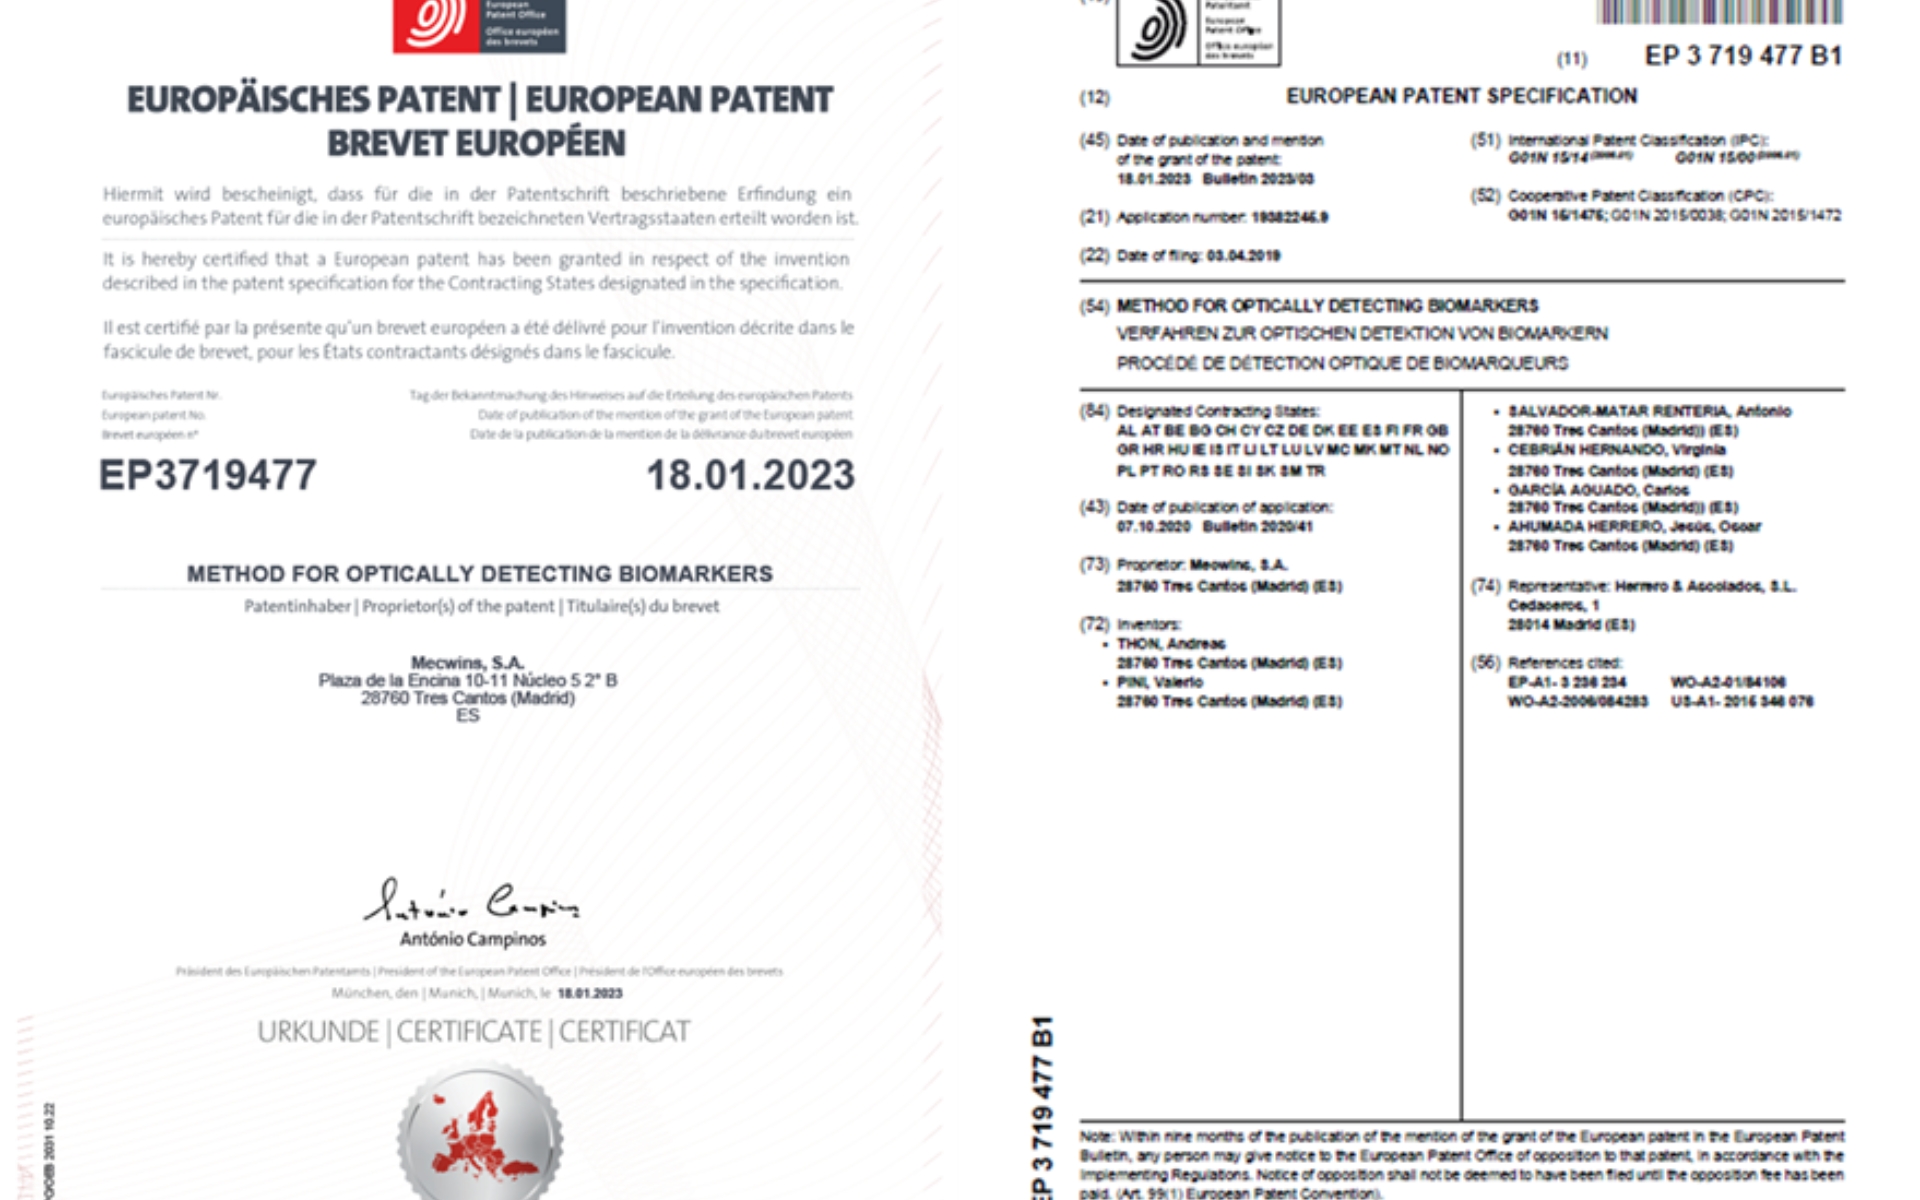 European patent specification